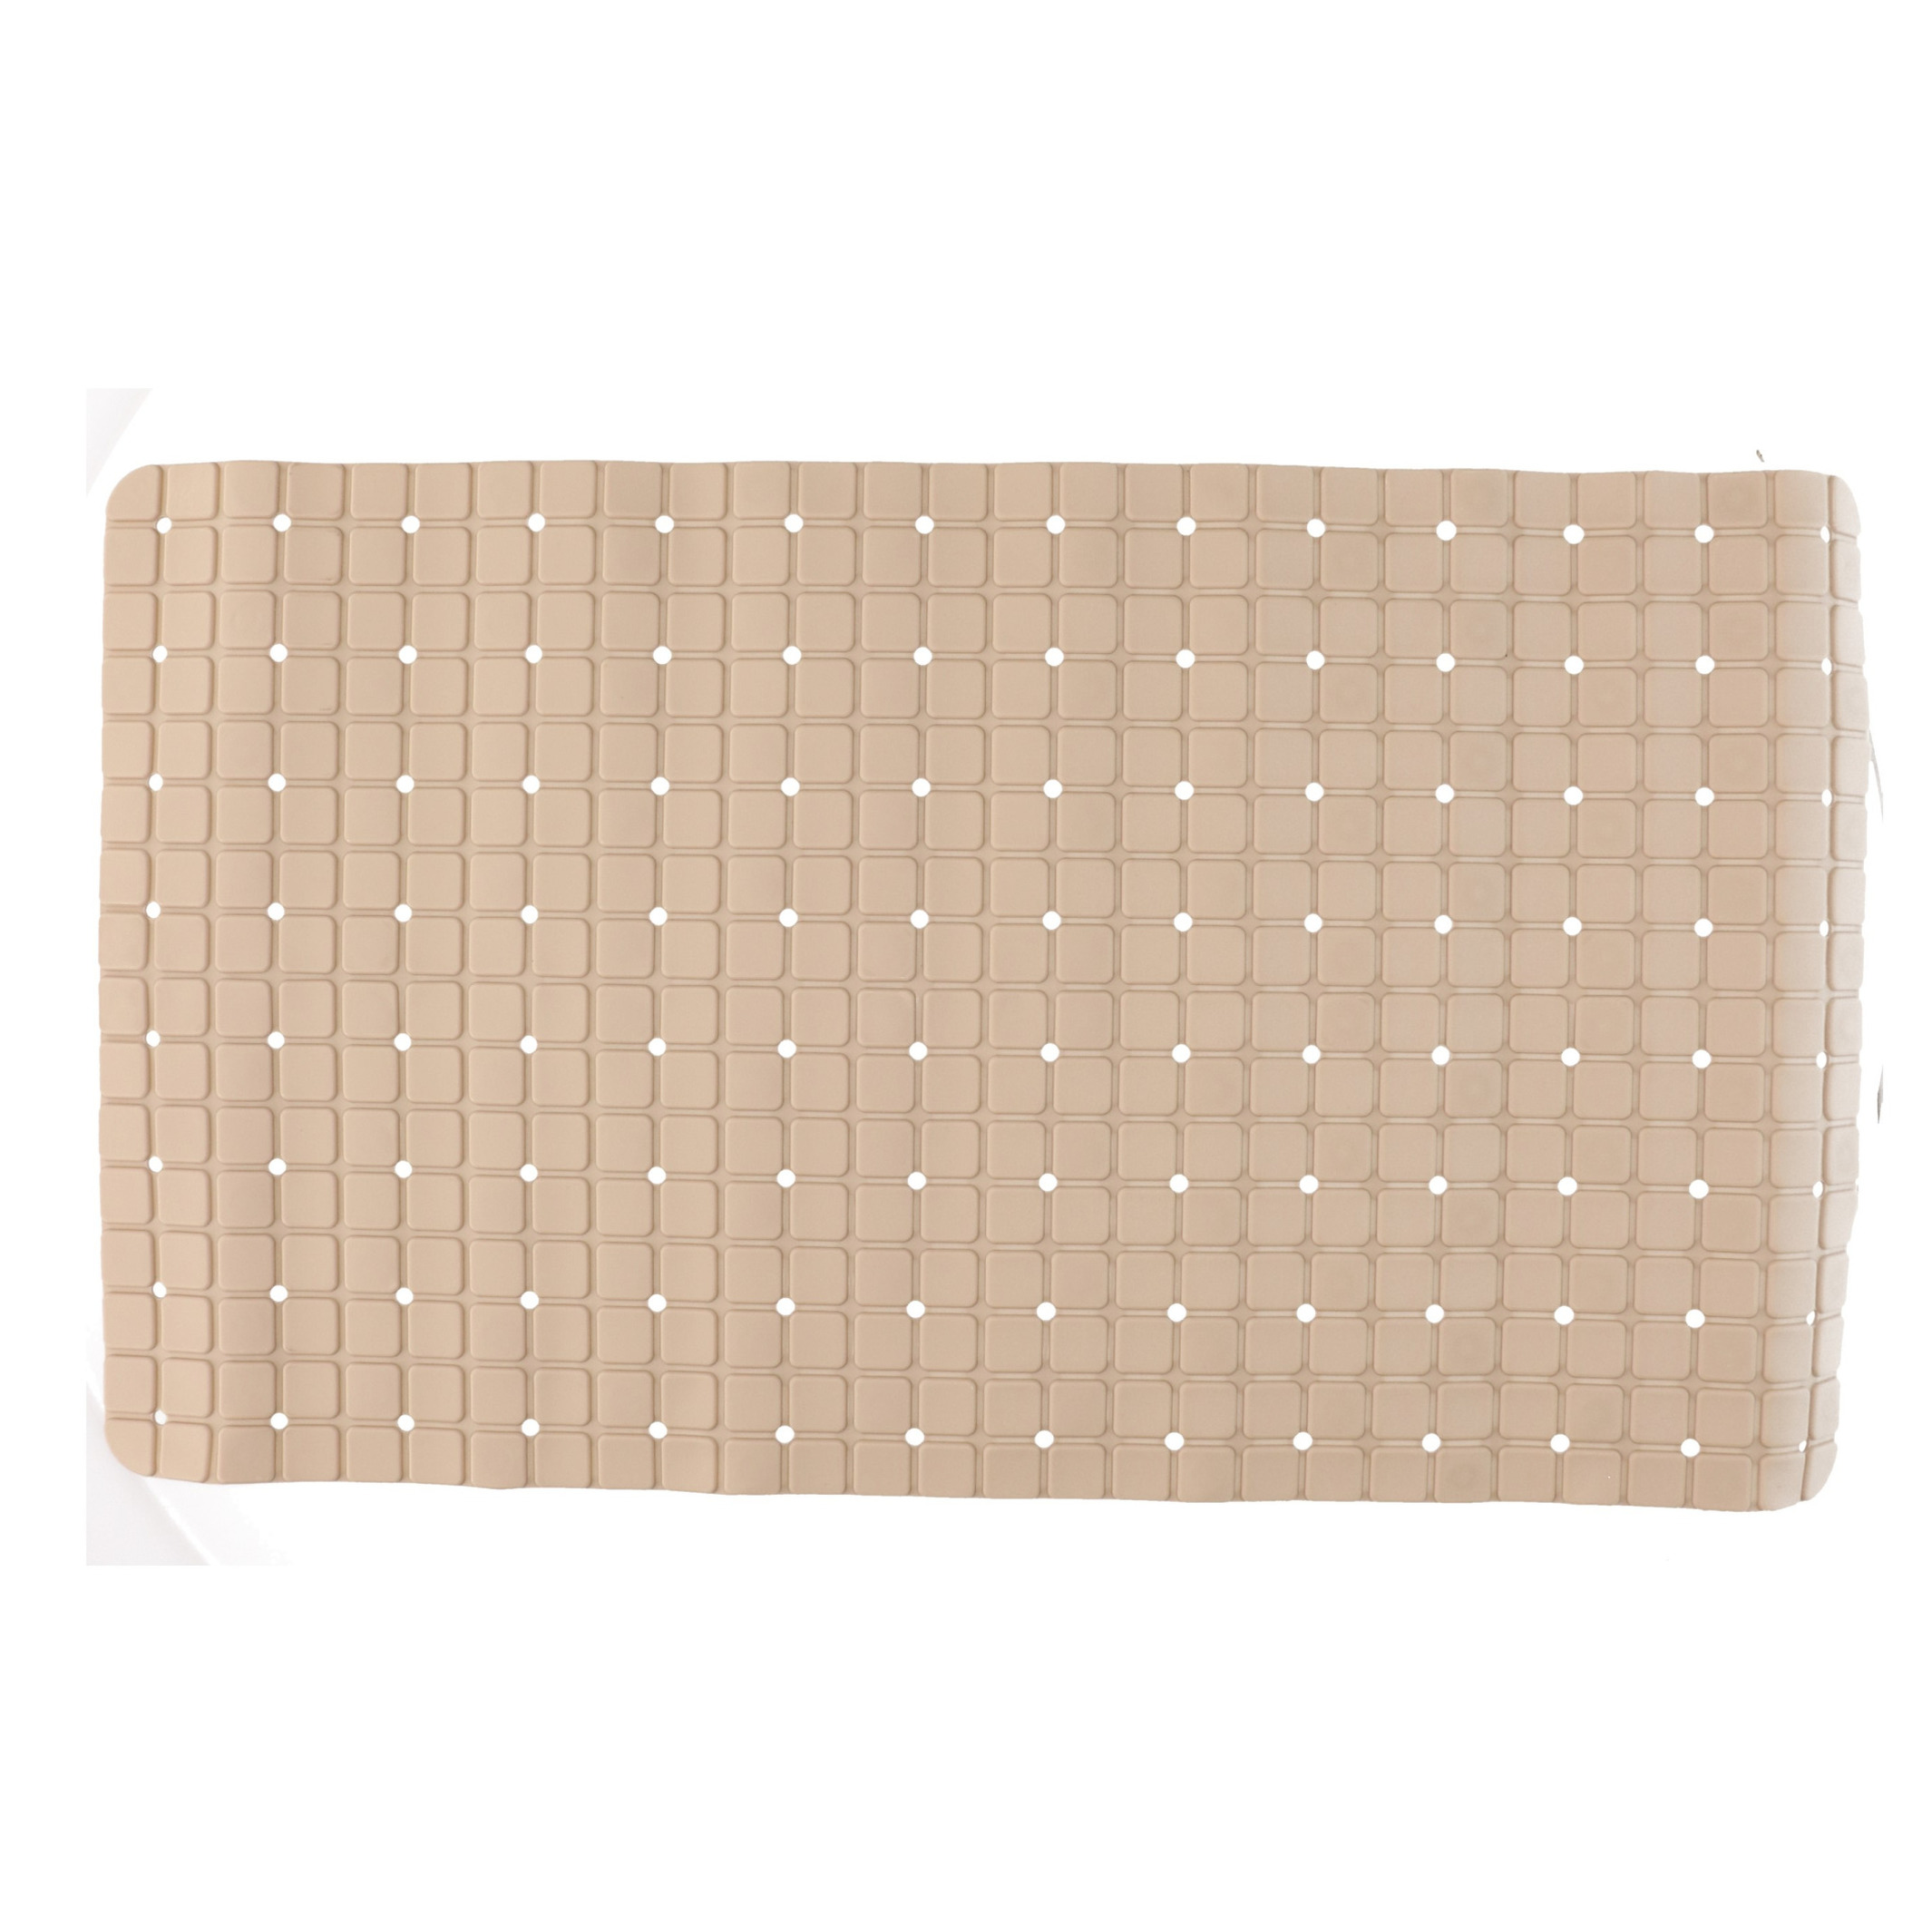 Badmat-douchemat anti-slip beige vierkant patroon 69 x 39 cm